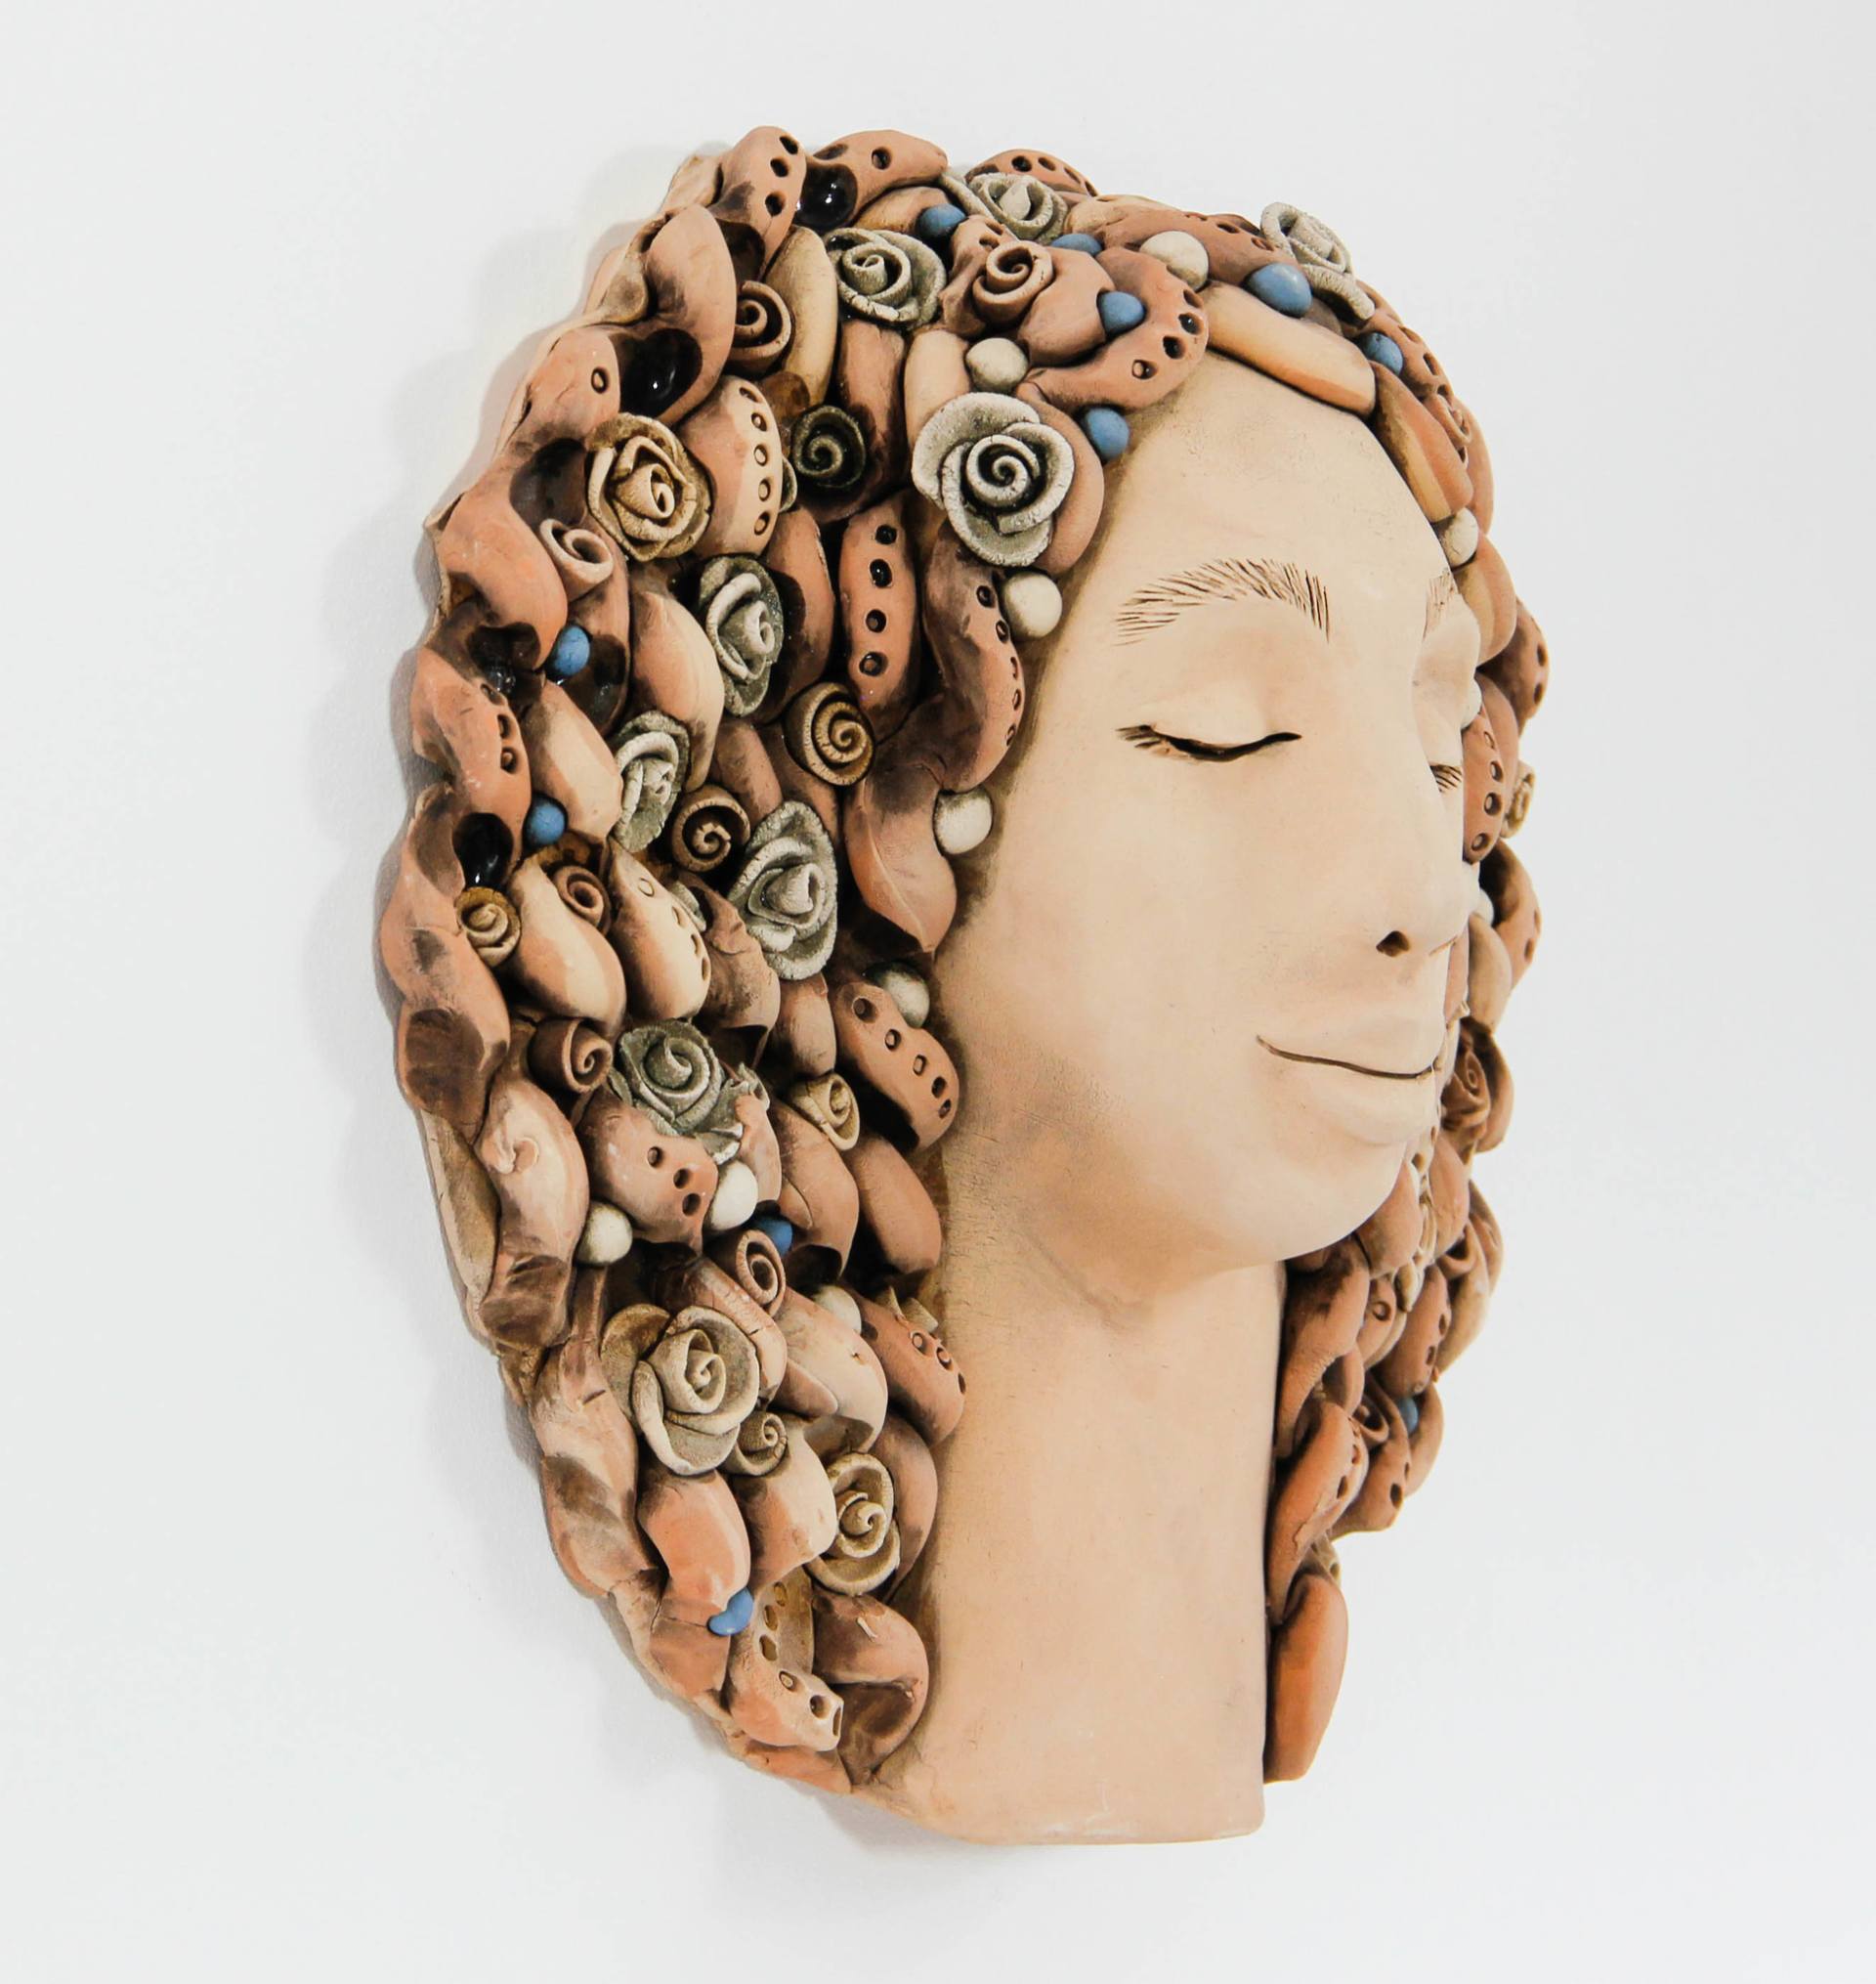 Saatchi Art: Wall decoration ceramic Woman Face Sculpture | Wall Art ...